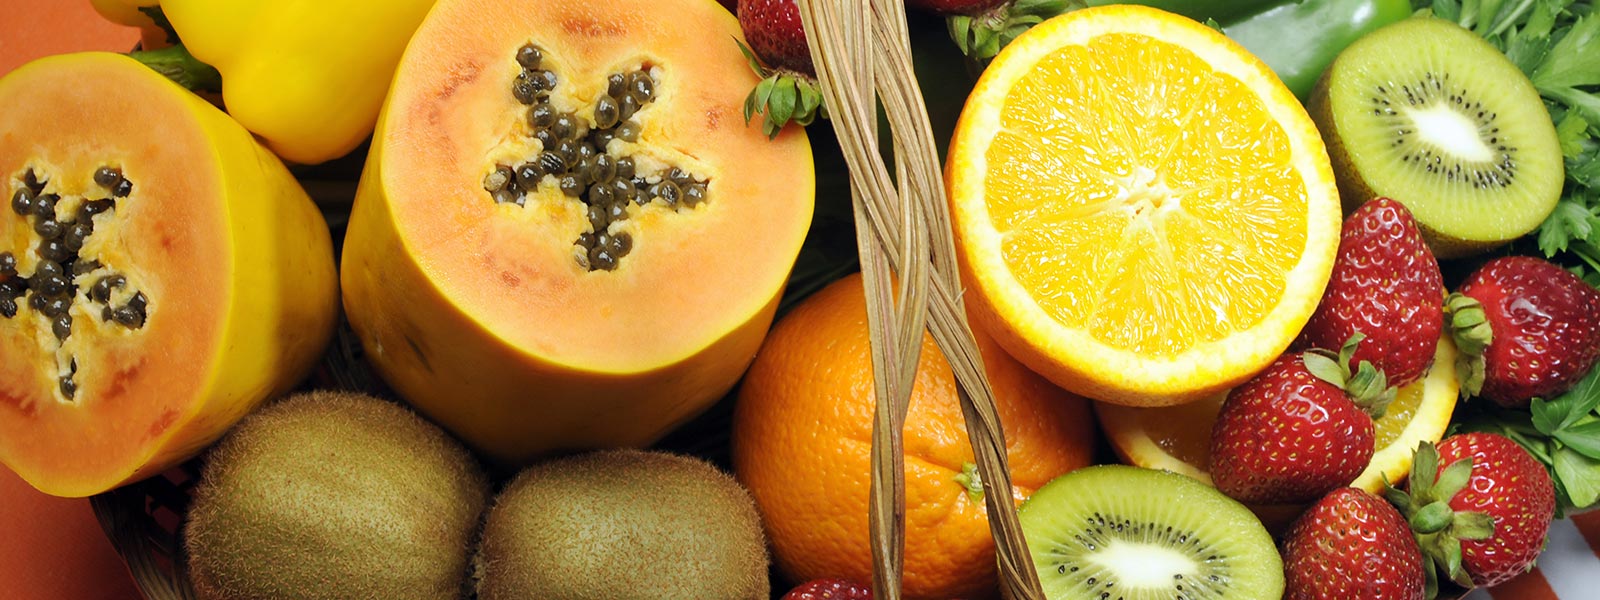 Image of fresh antioxidant rich natural fruits arranged together